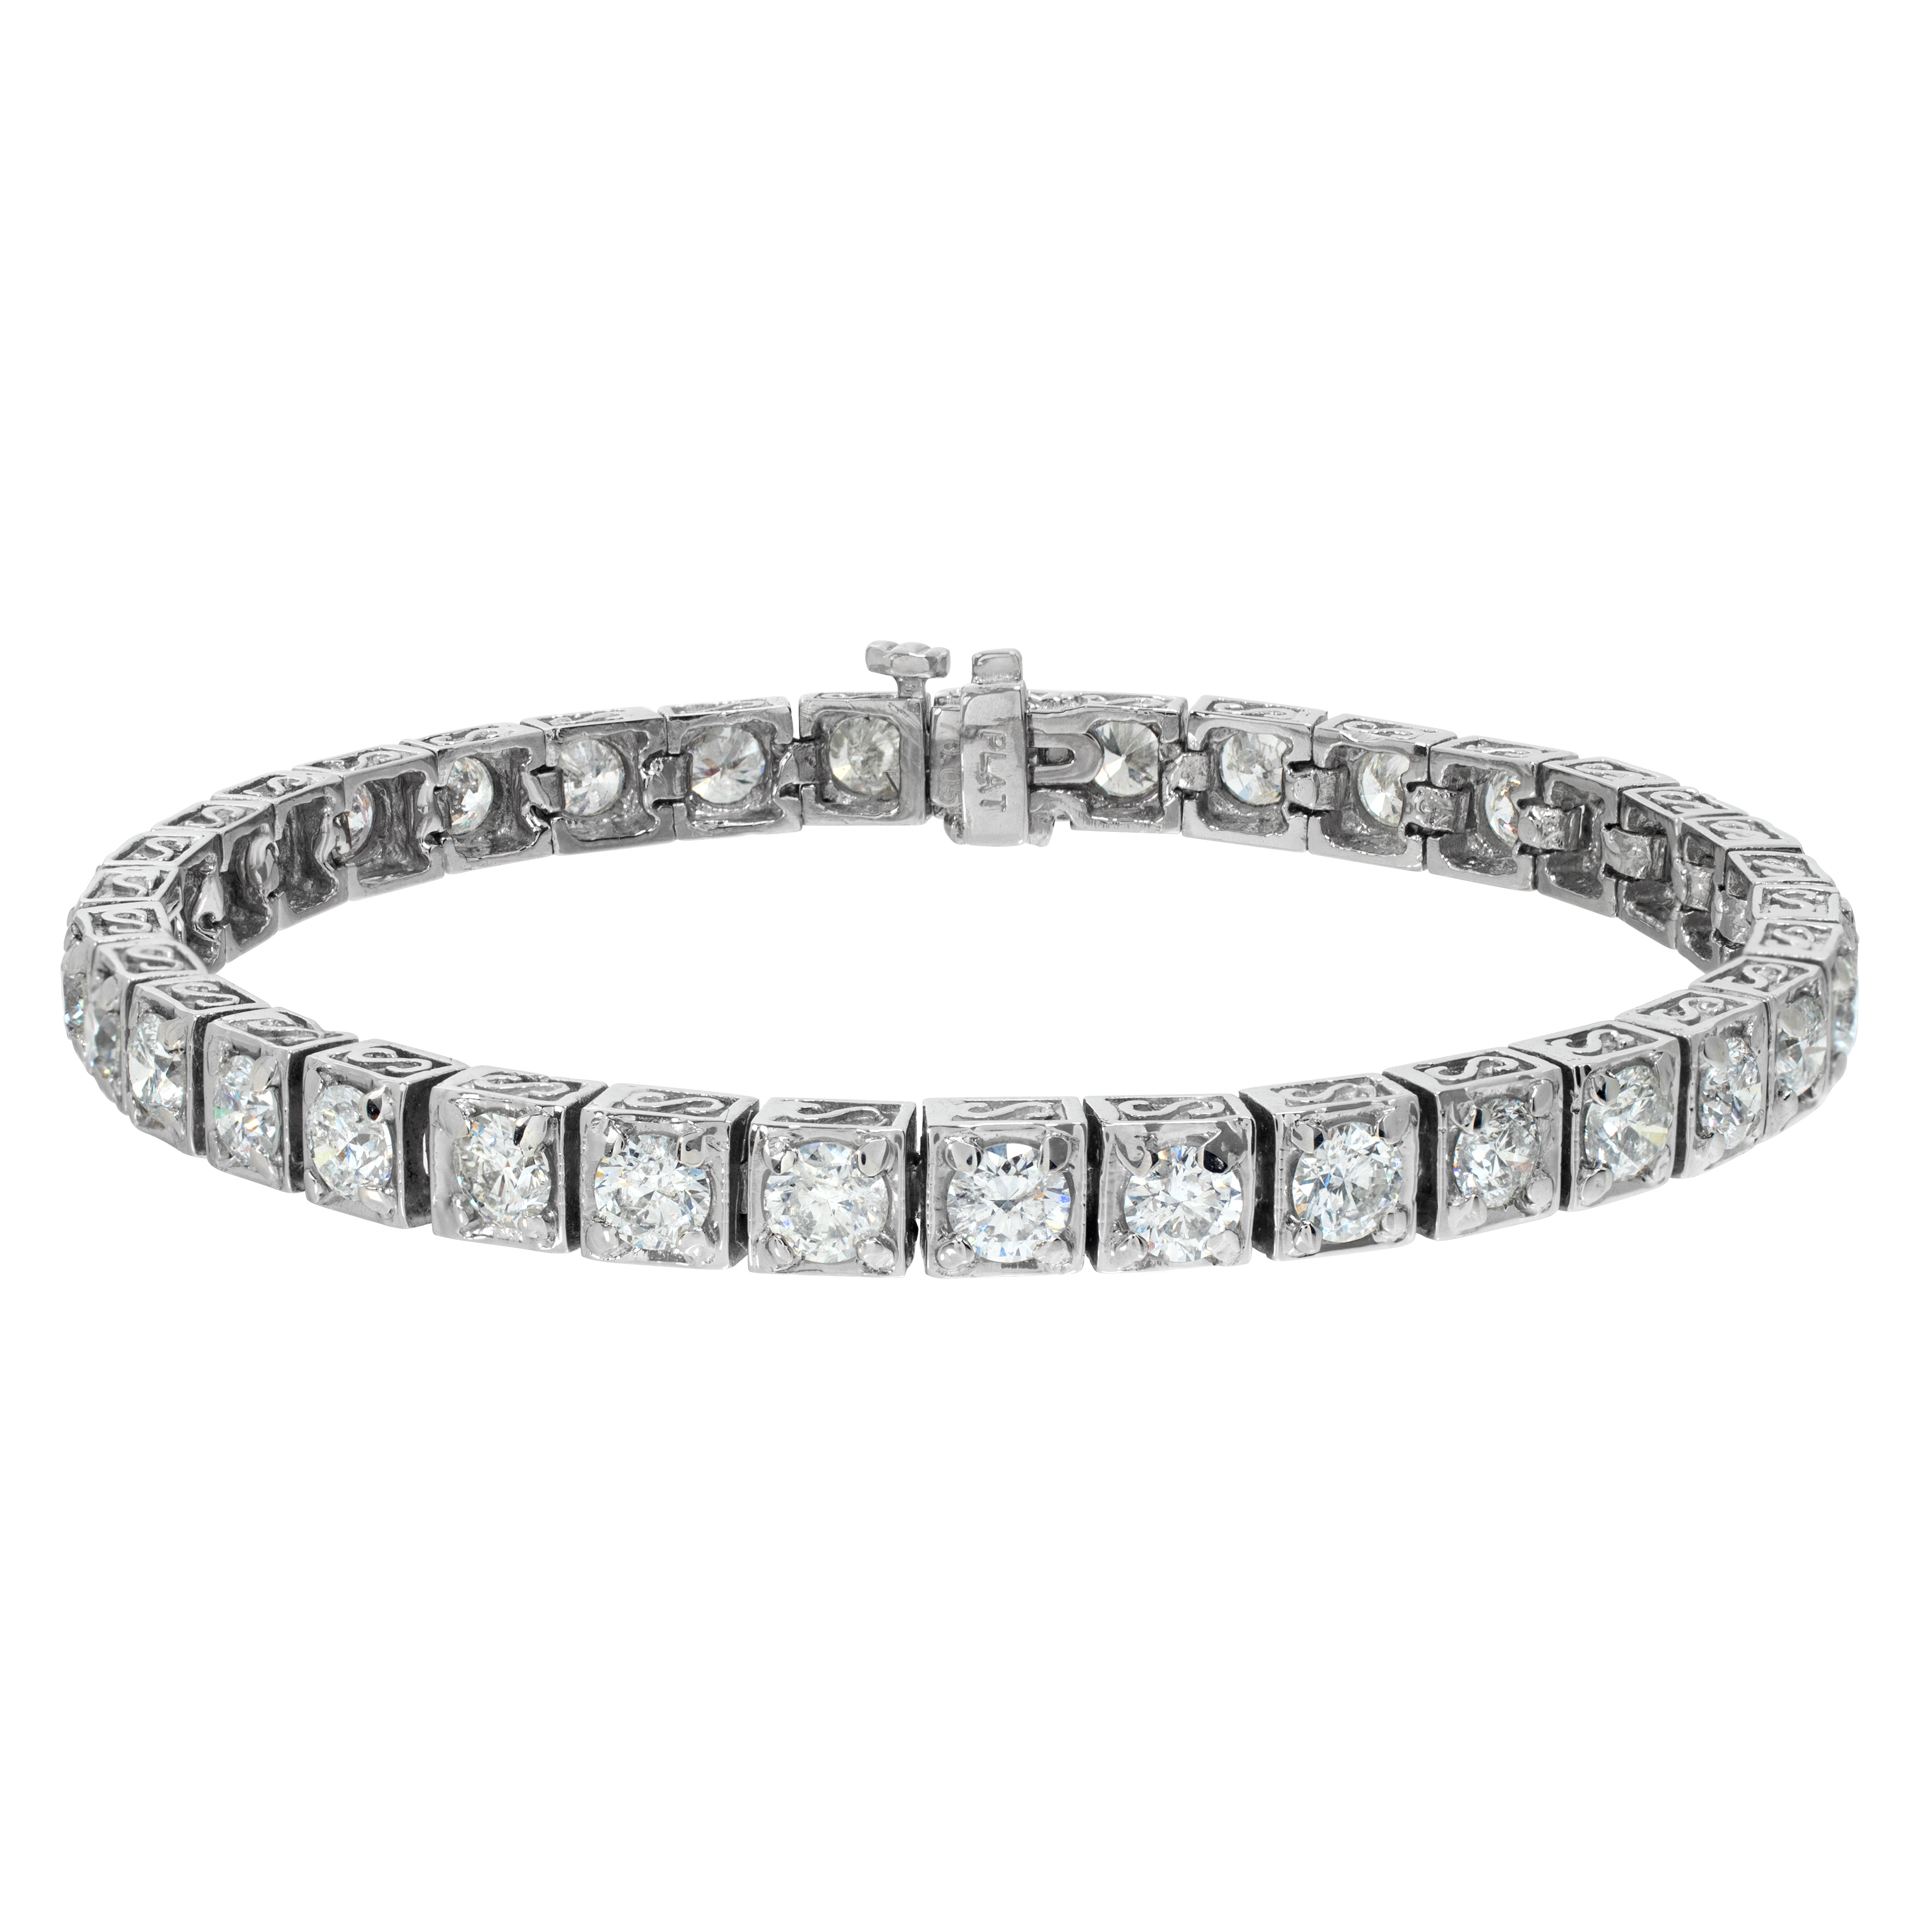 Diamond bracelet with 7.05 carats set in platinum